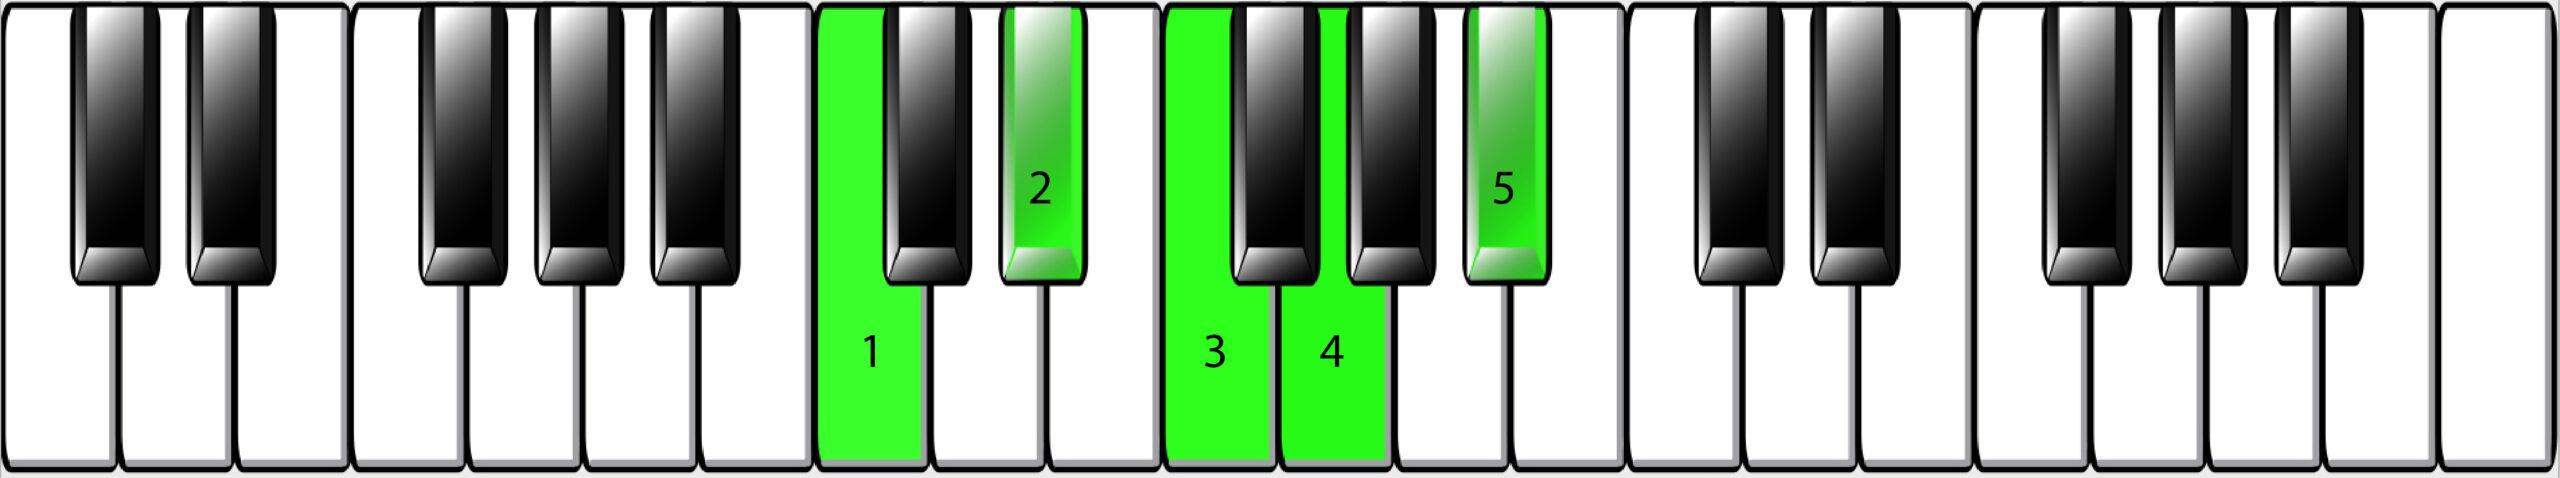 Keyboard diagram.